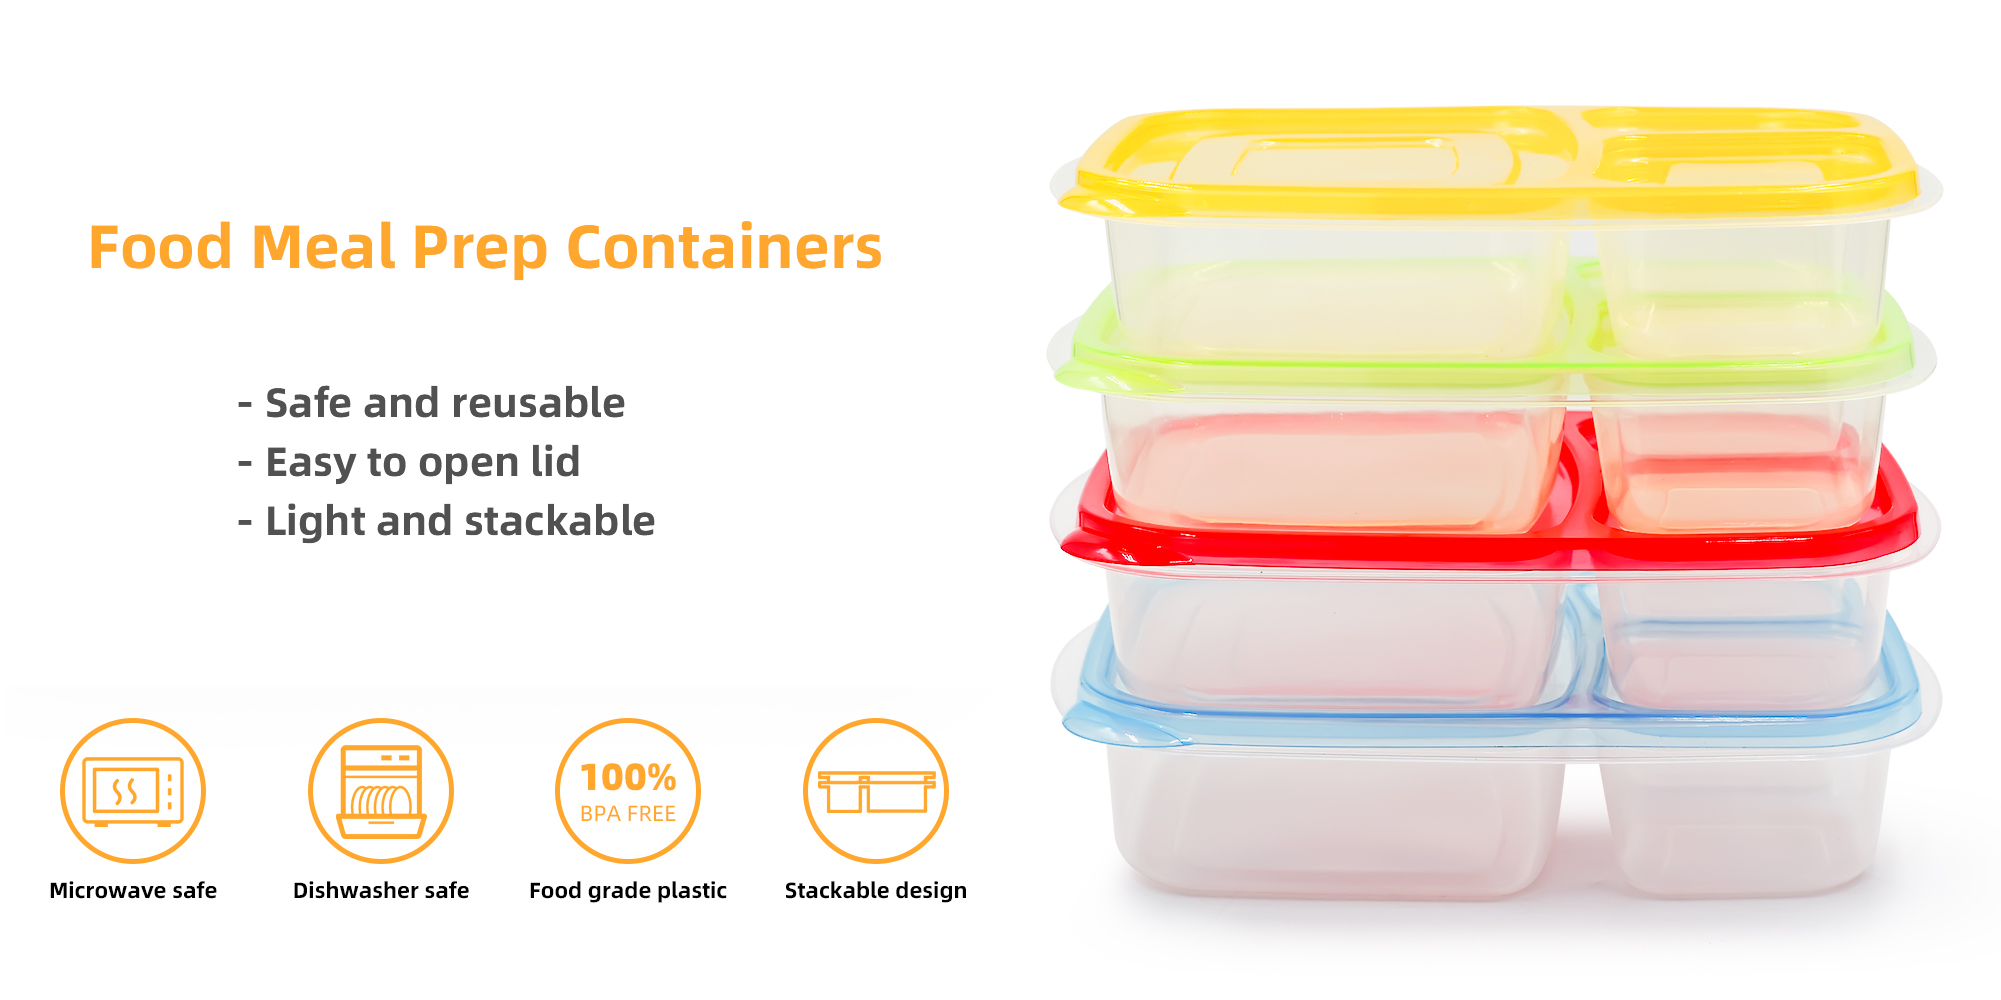 Hur man använder Food Meal Prep Containers |Yongli